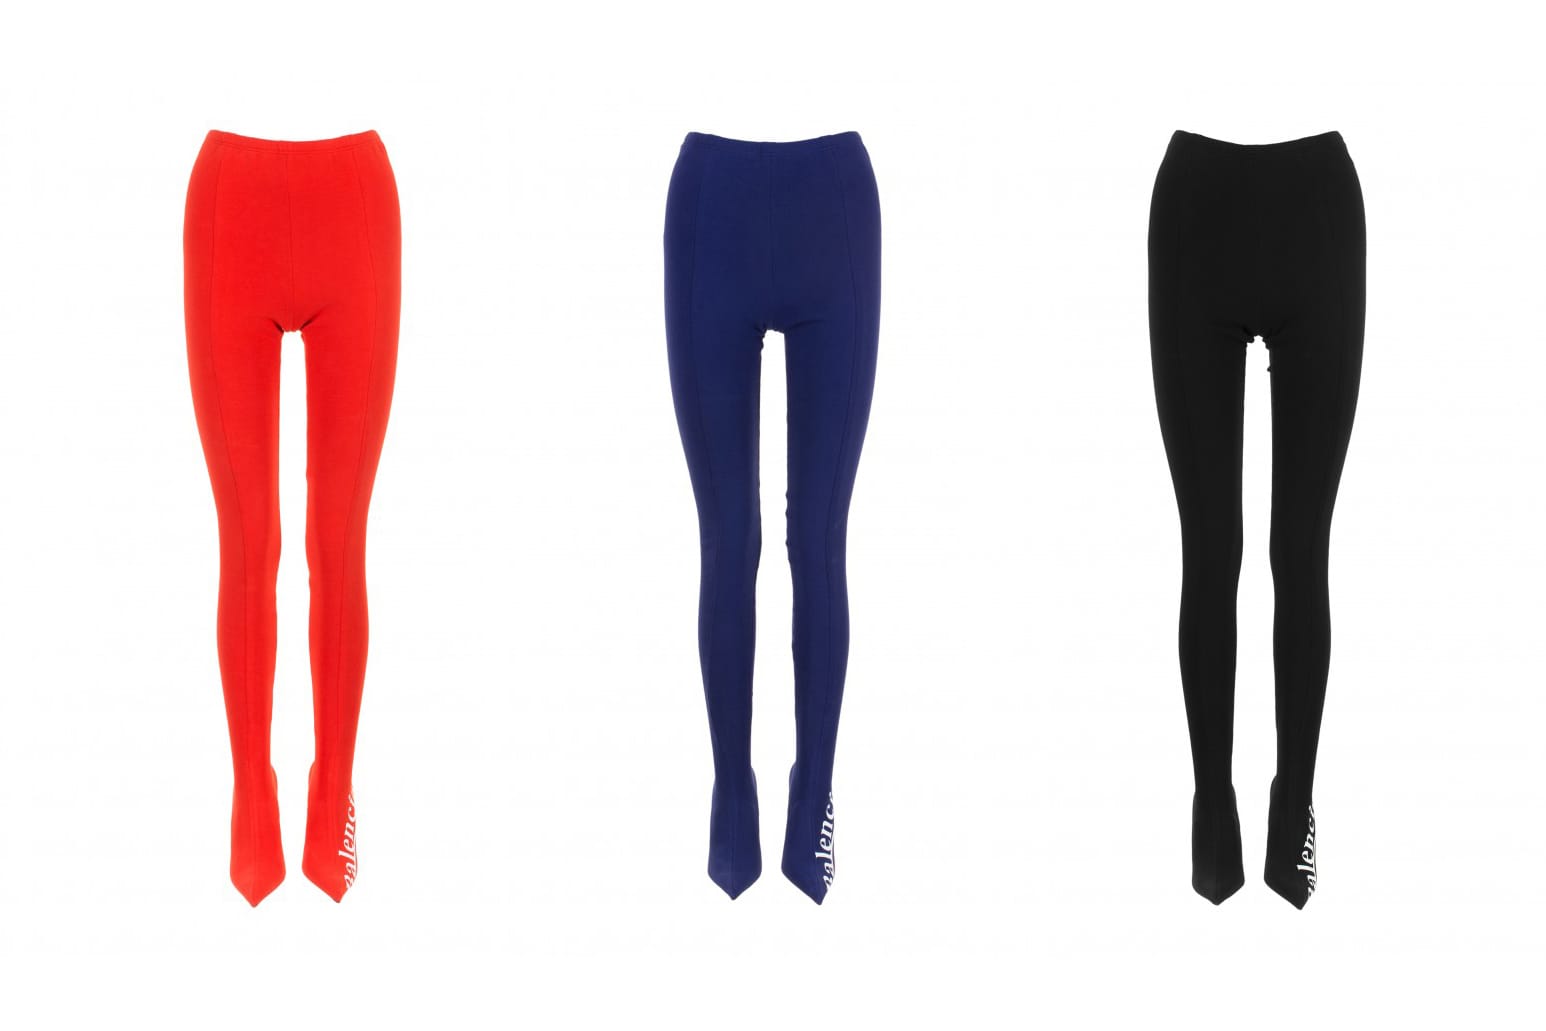 Balenciaga x colette Drops Chic Legging Boots | HYPEBAE